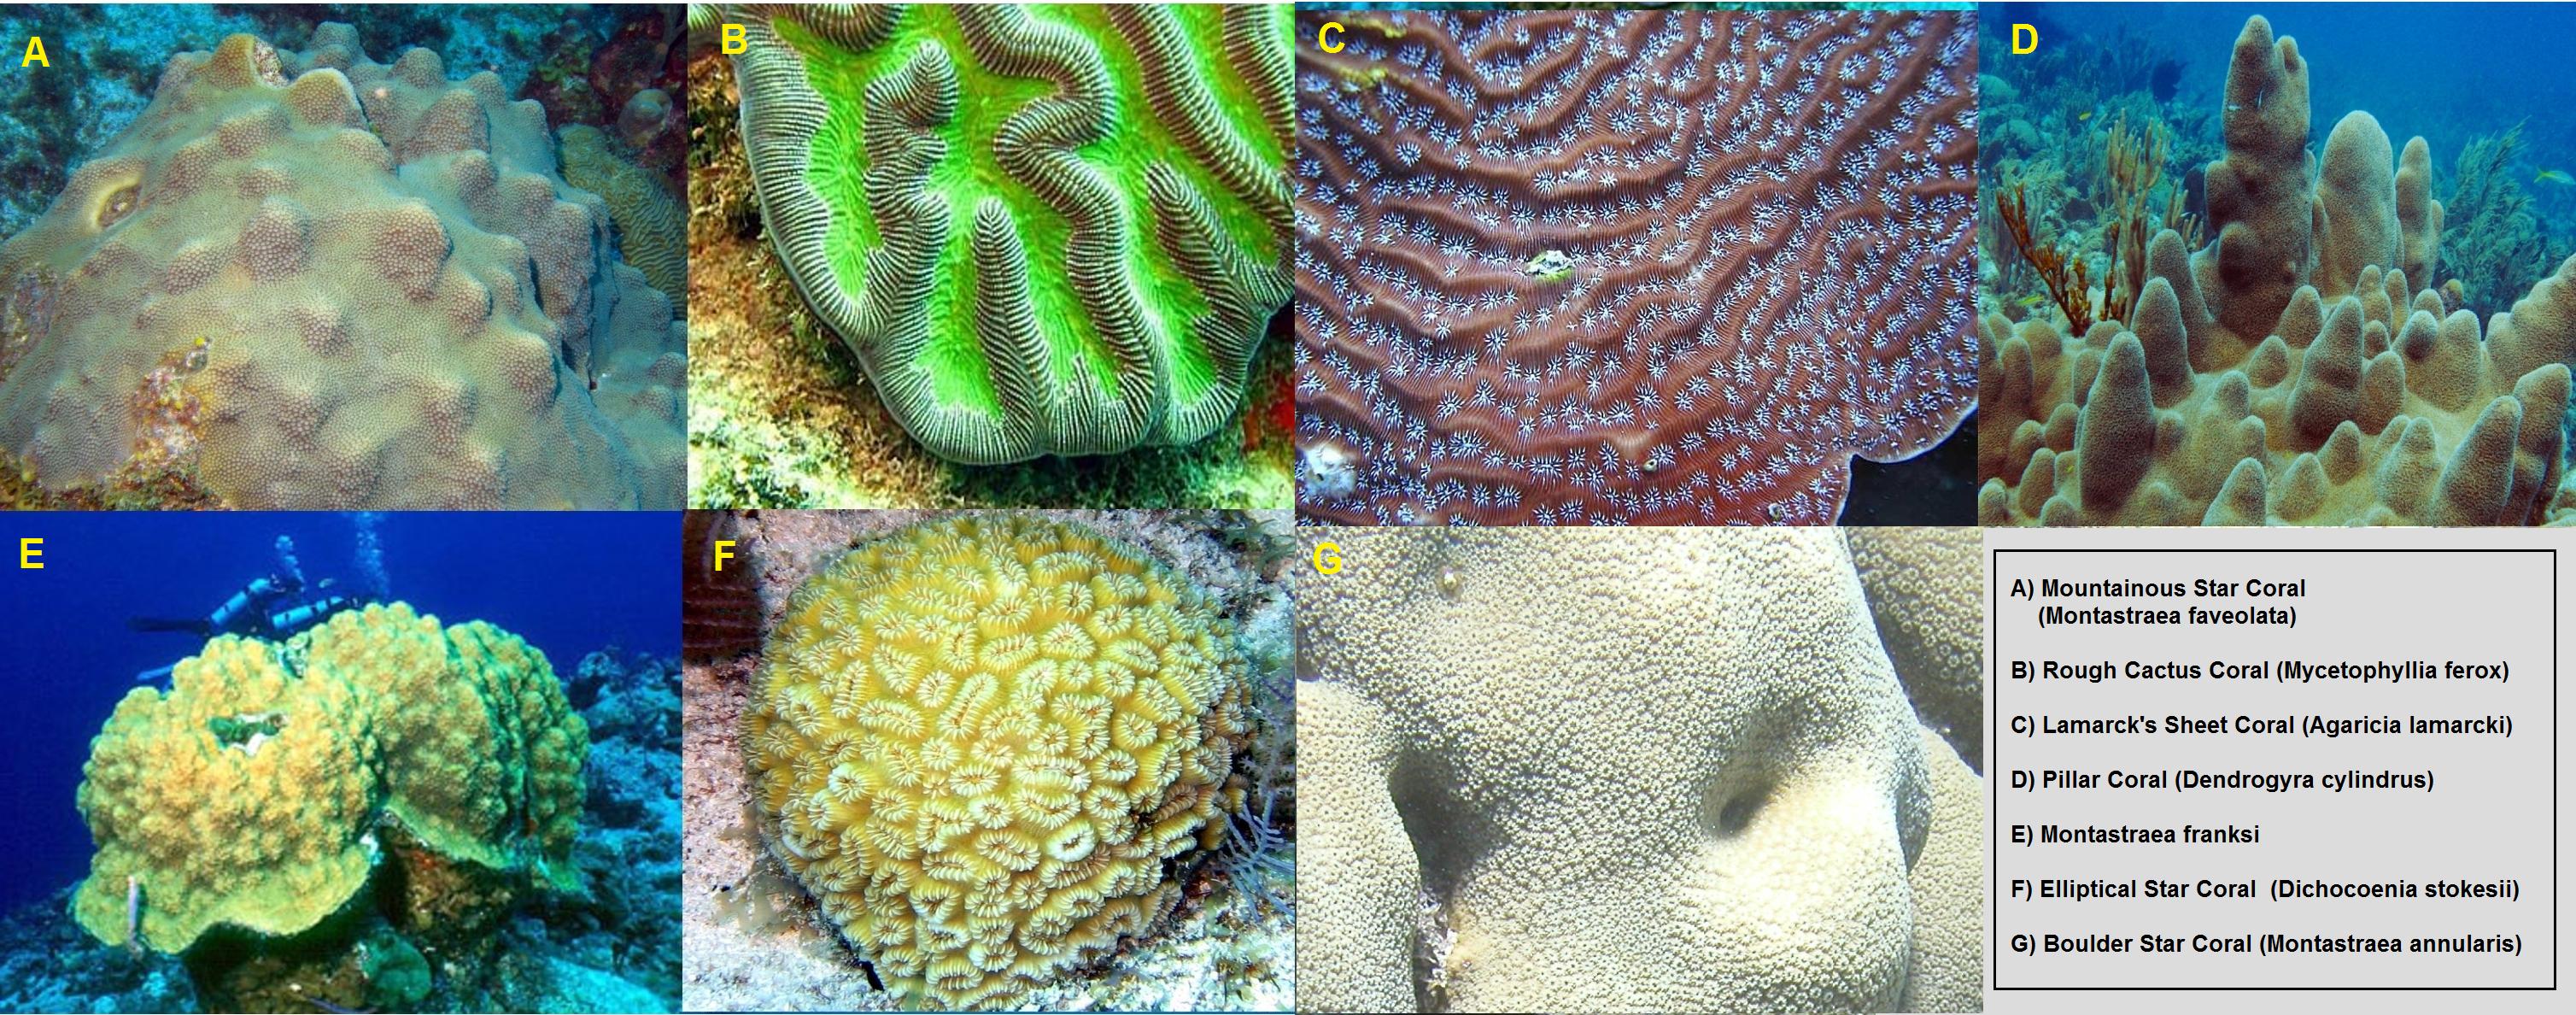 Types of Corals. Коралл Montastraea. Коралловые листья. Mycetophyllia. Лист риф 4